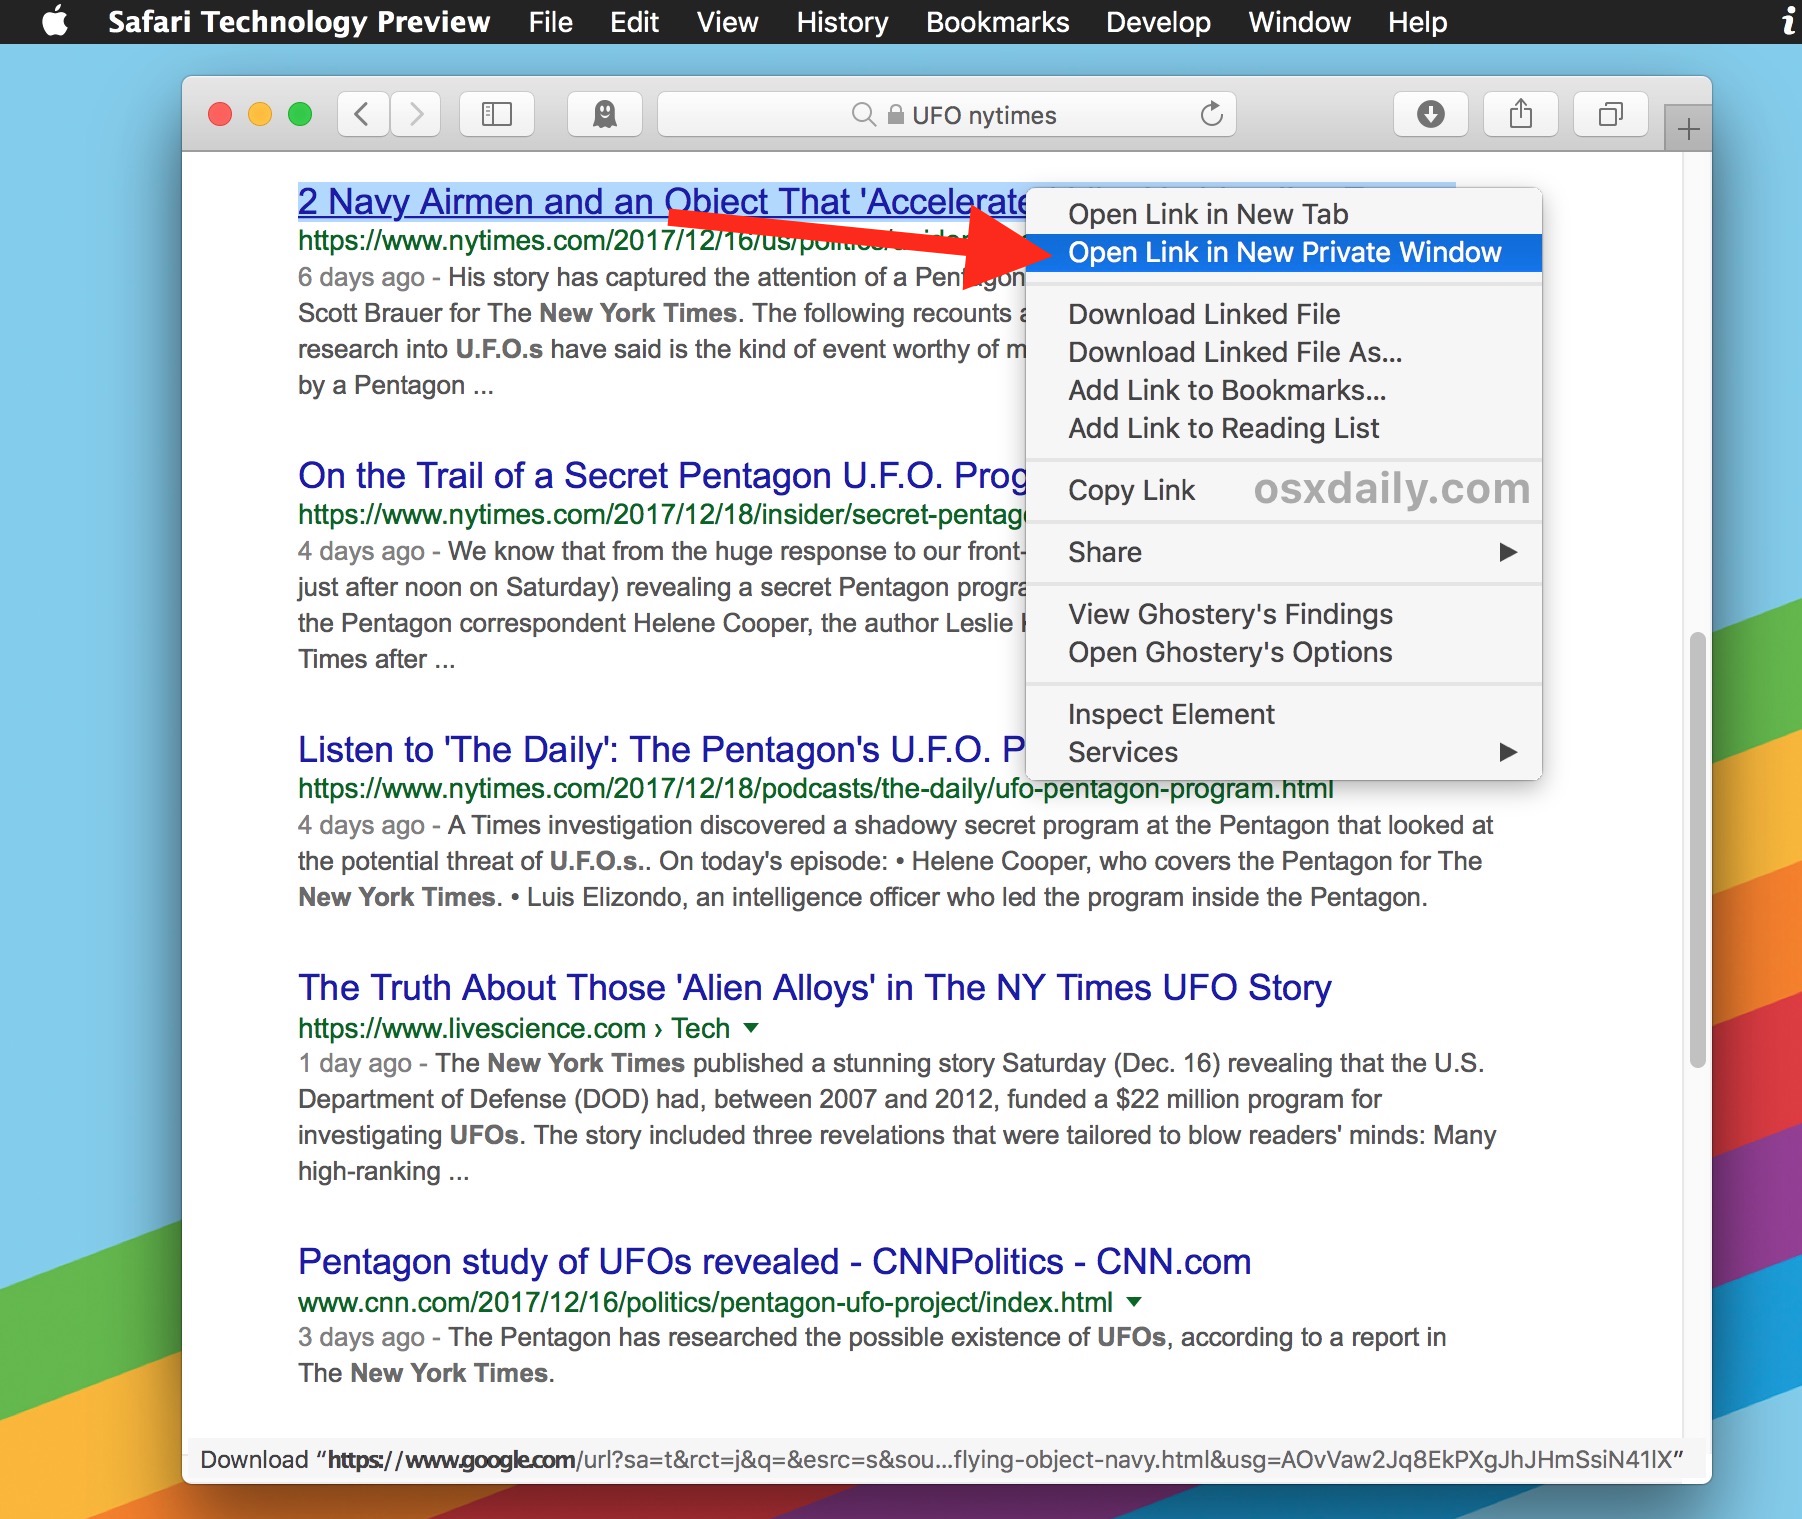 Choose open link in new private window in Safari for Mac